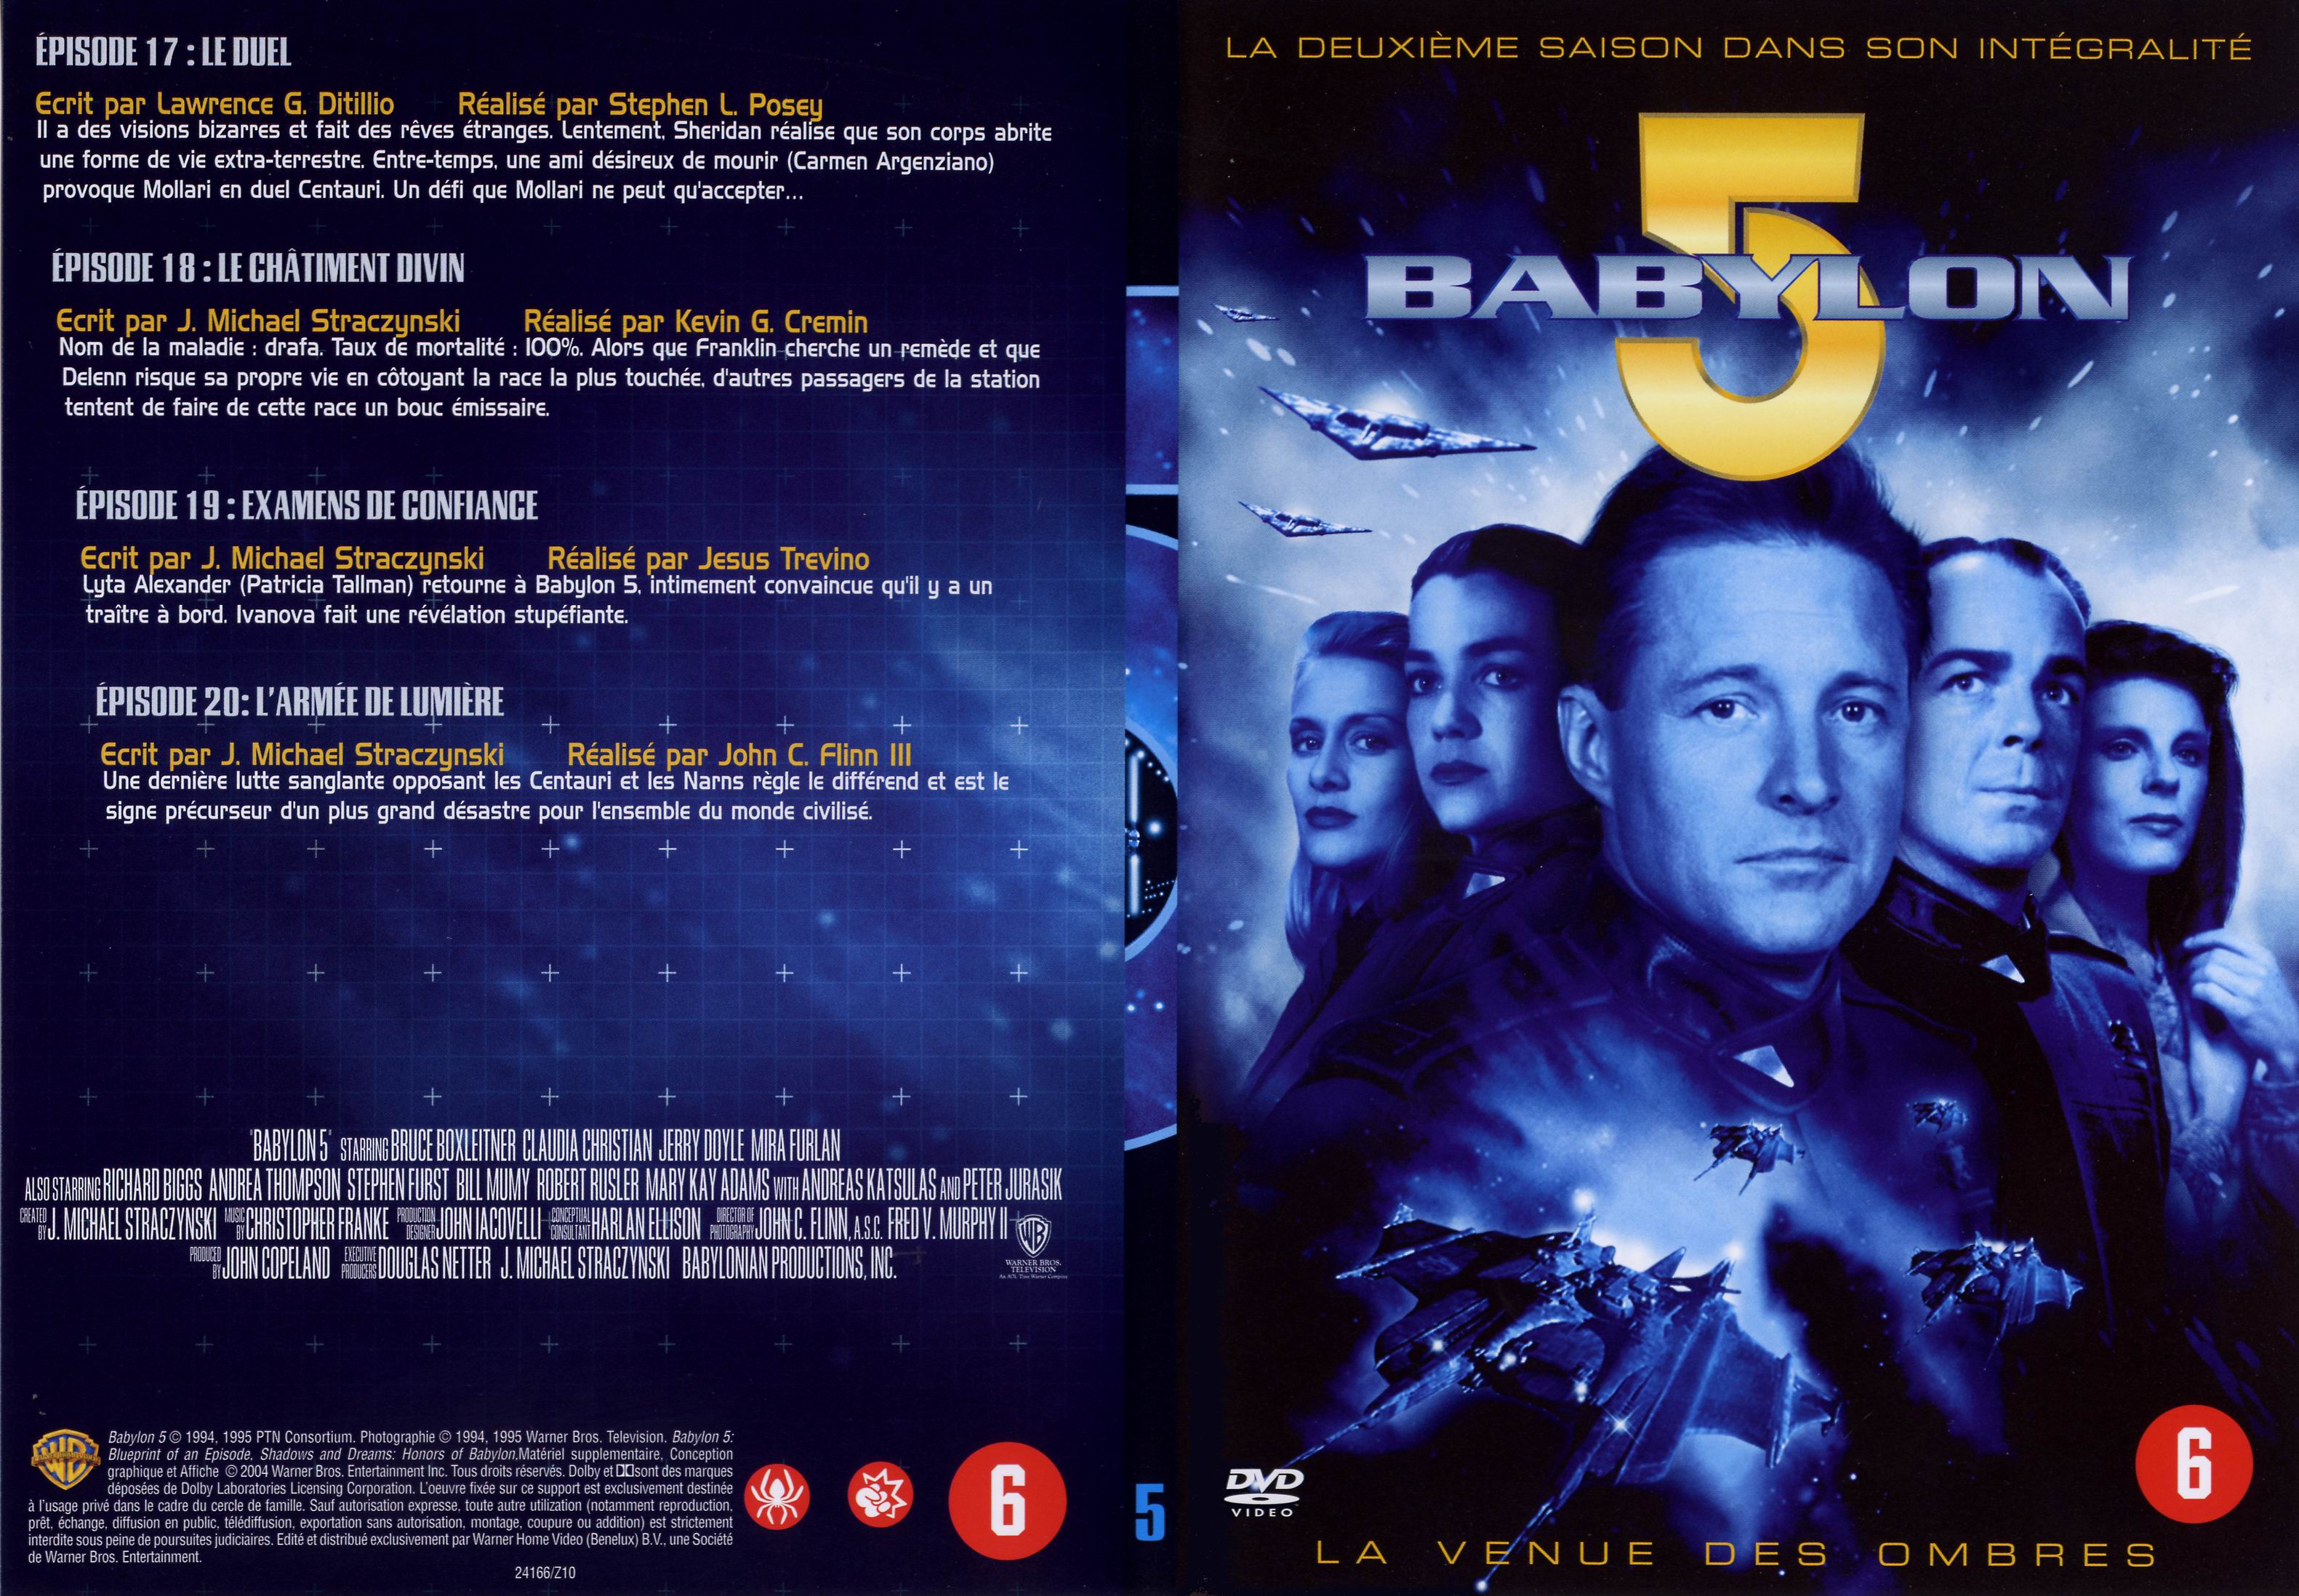 Jaquette DVD Babylon 5 saison 2 dvd 5